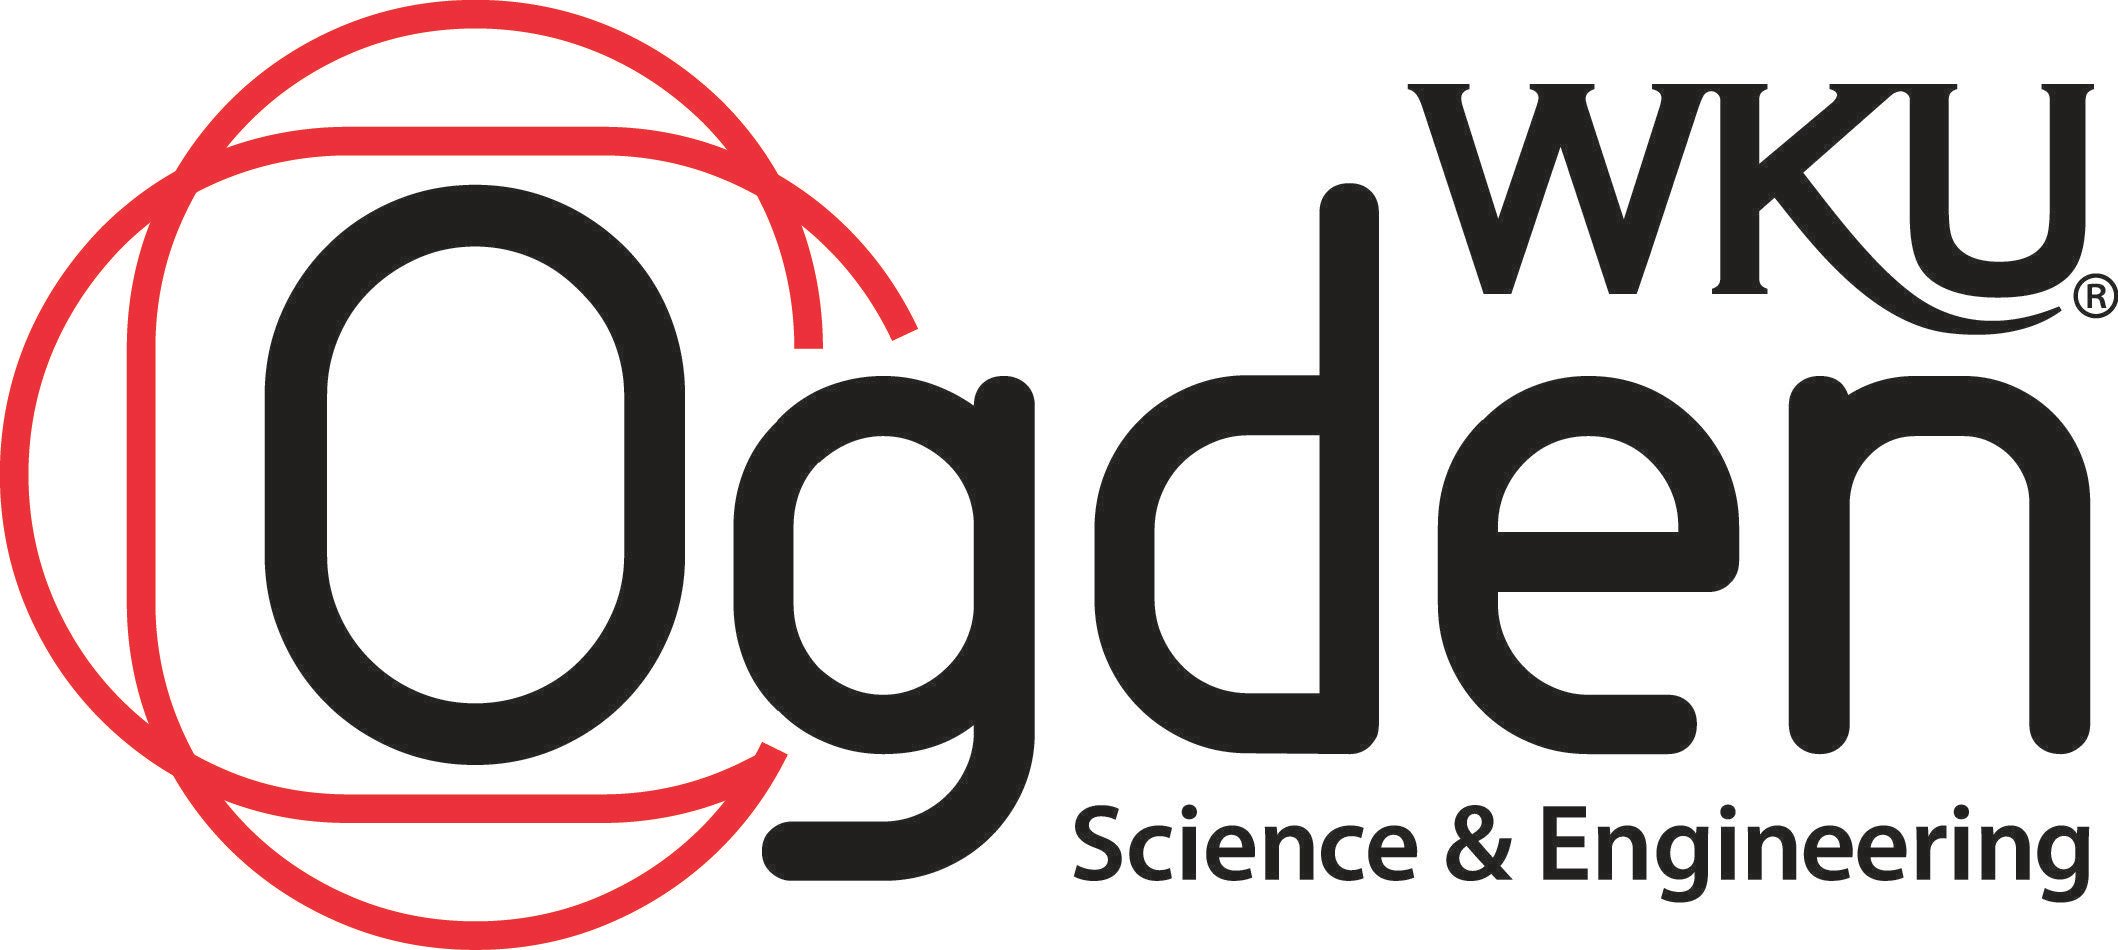 Red and Black Western Logo - OCSE Logos. Western Kentucky University